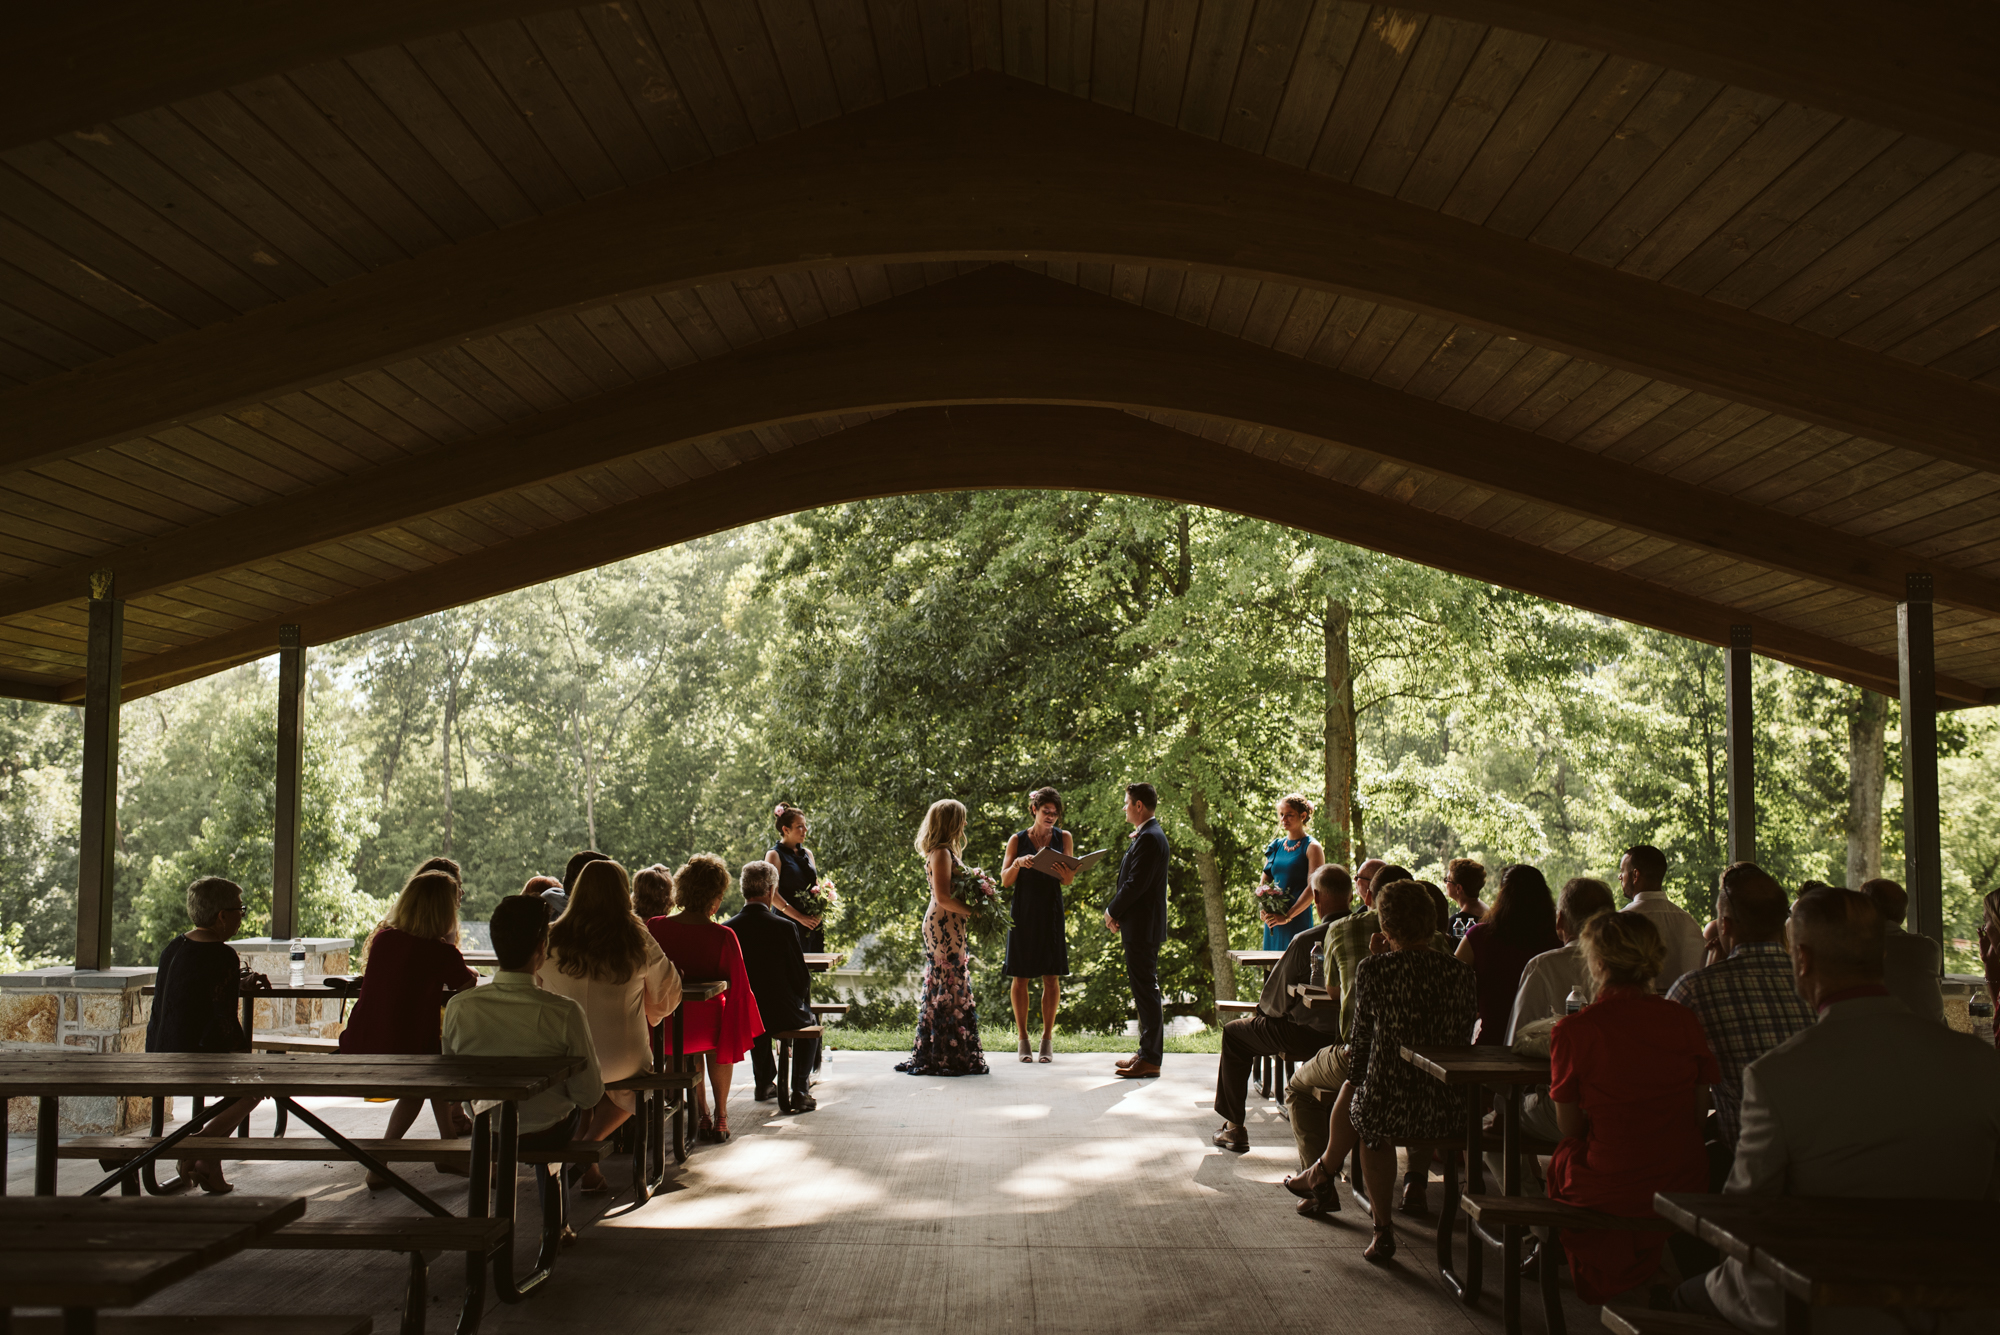 Pop-up Ceremony, Outdoor Wedding, Casual, Simple, Lake Roland, Baltimore, Maryland Wedding Photographer, Laid Back, DIY, Camp Pavilion Wedding, Nature, Ceremony Photo